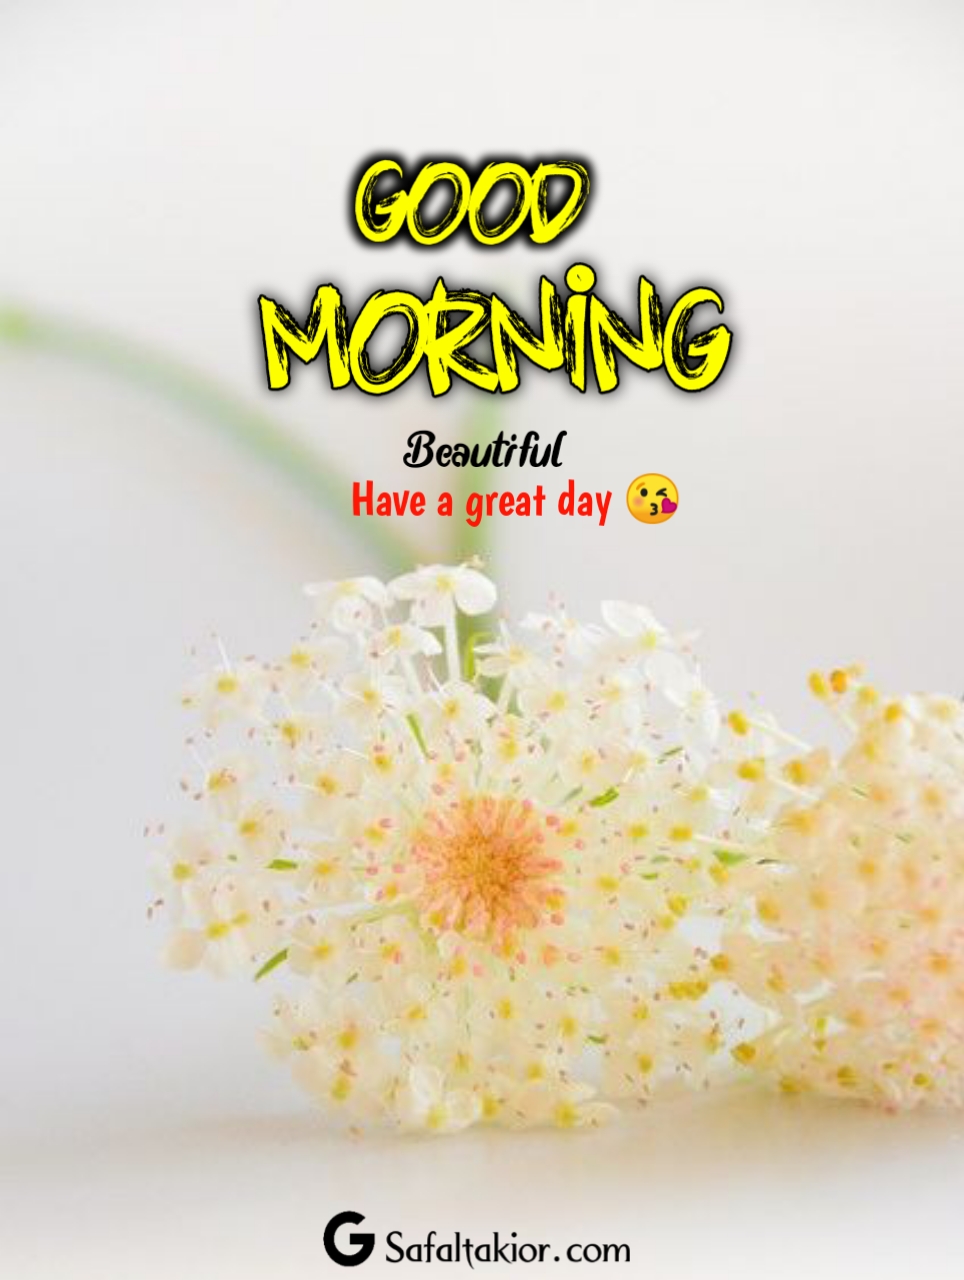 good morning images free download